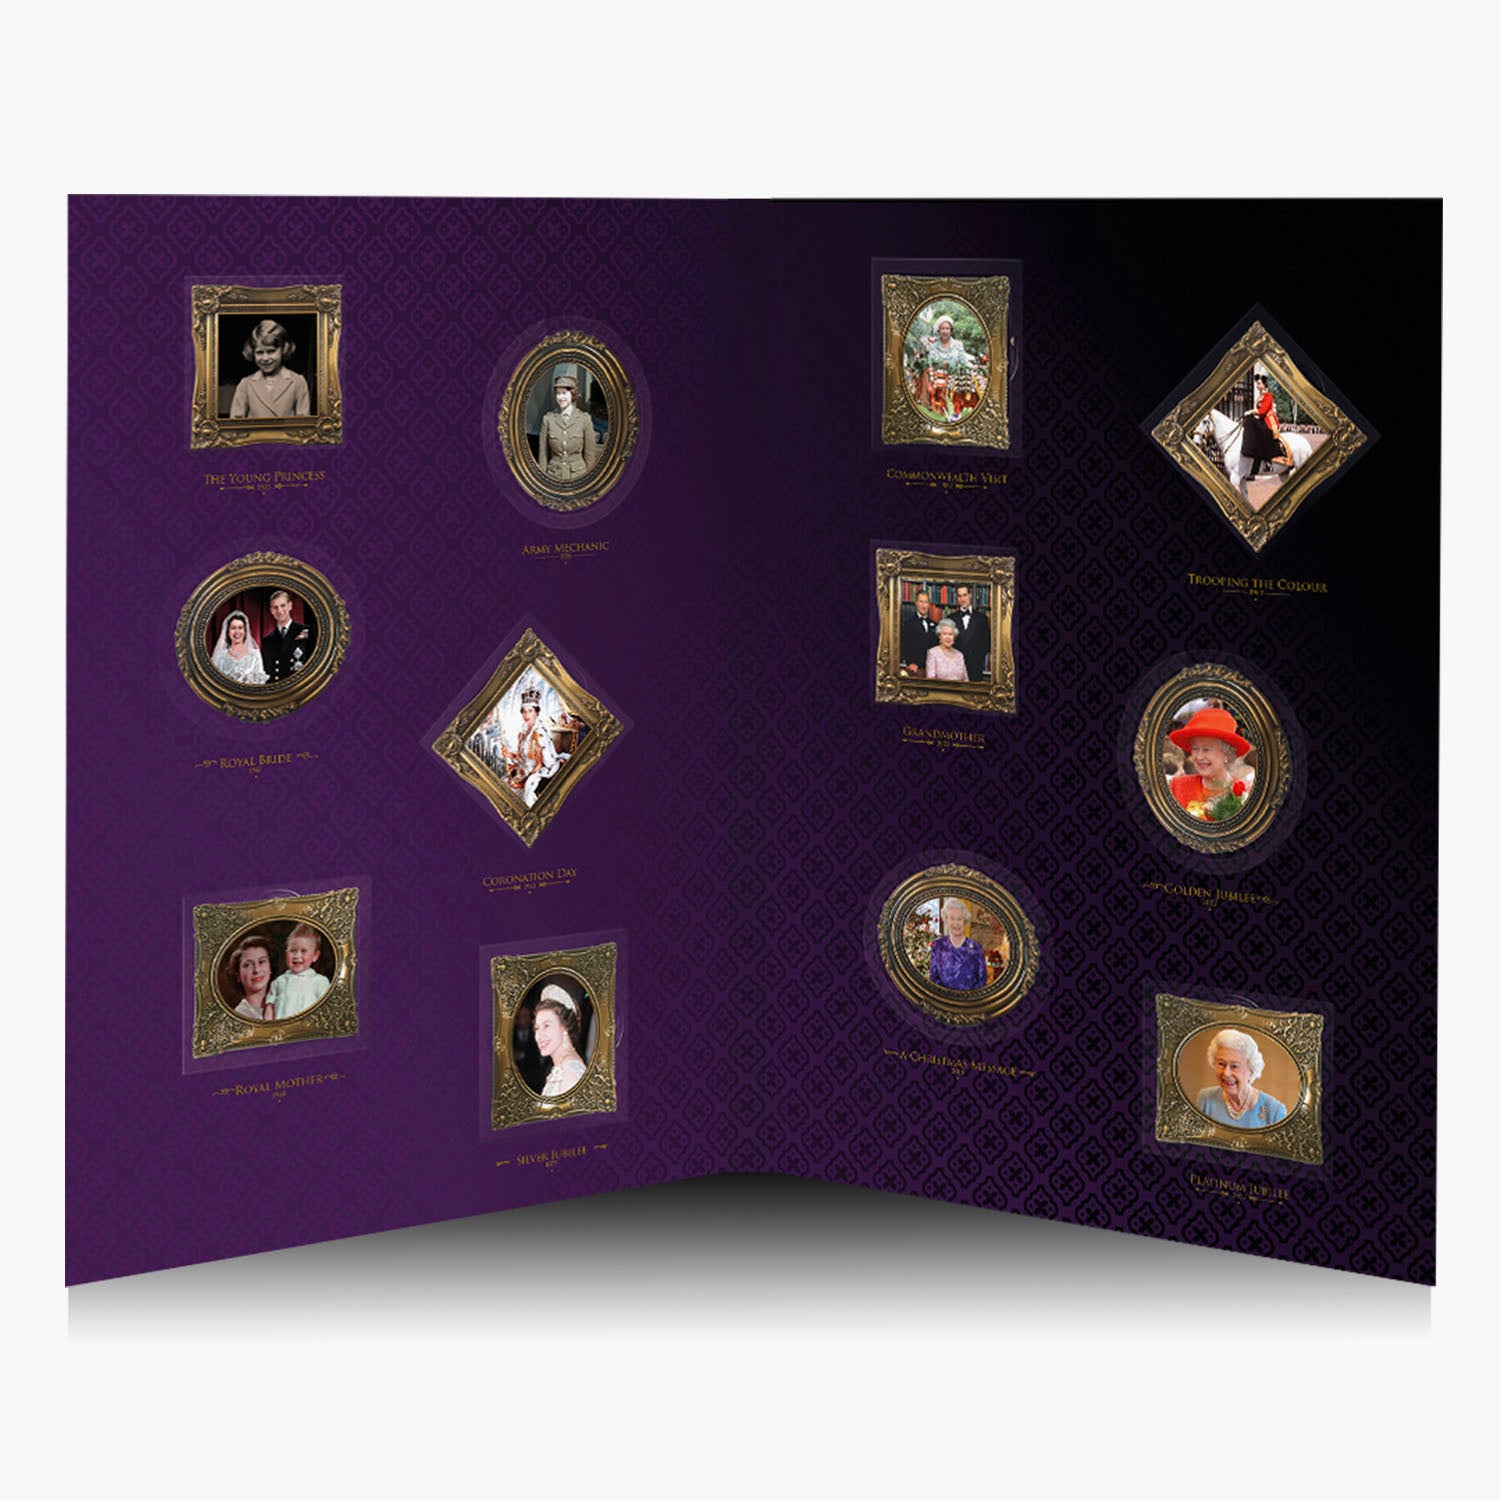 A Life in Portrait - Queen Elizabeth II Complete Collection